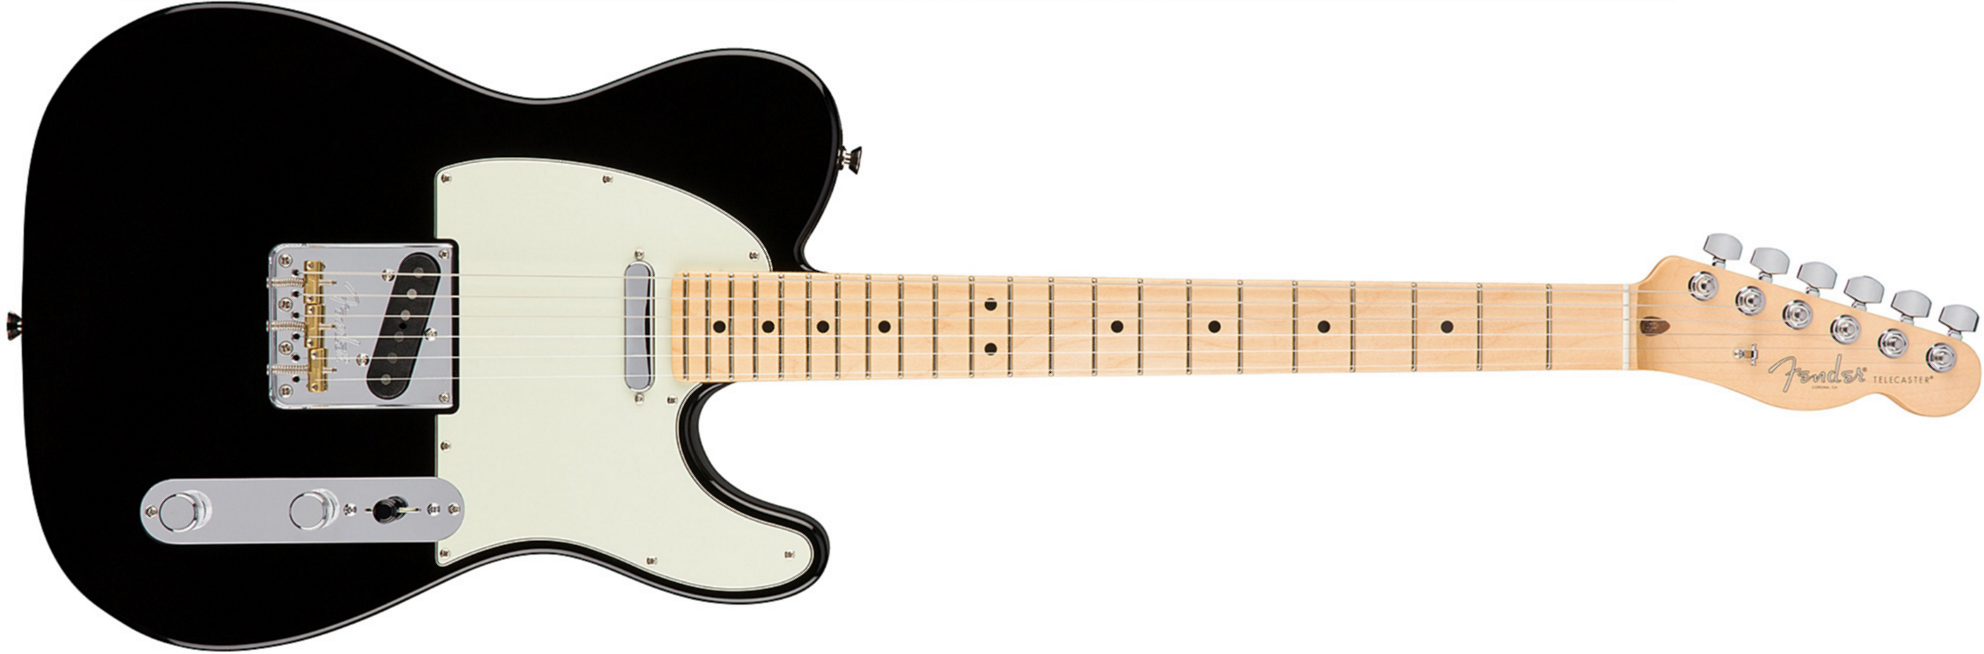 Fender Tele American Professional 2s Usa Mn - Black - Guitarra eléctrica con forma de tel - Main picture